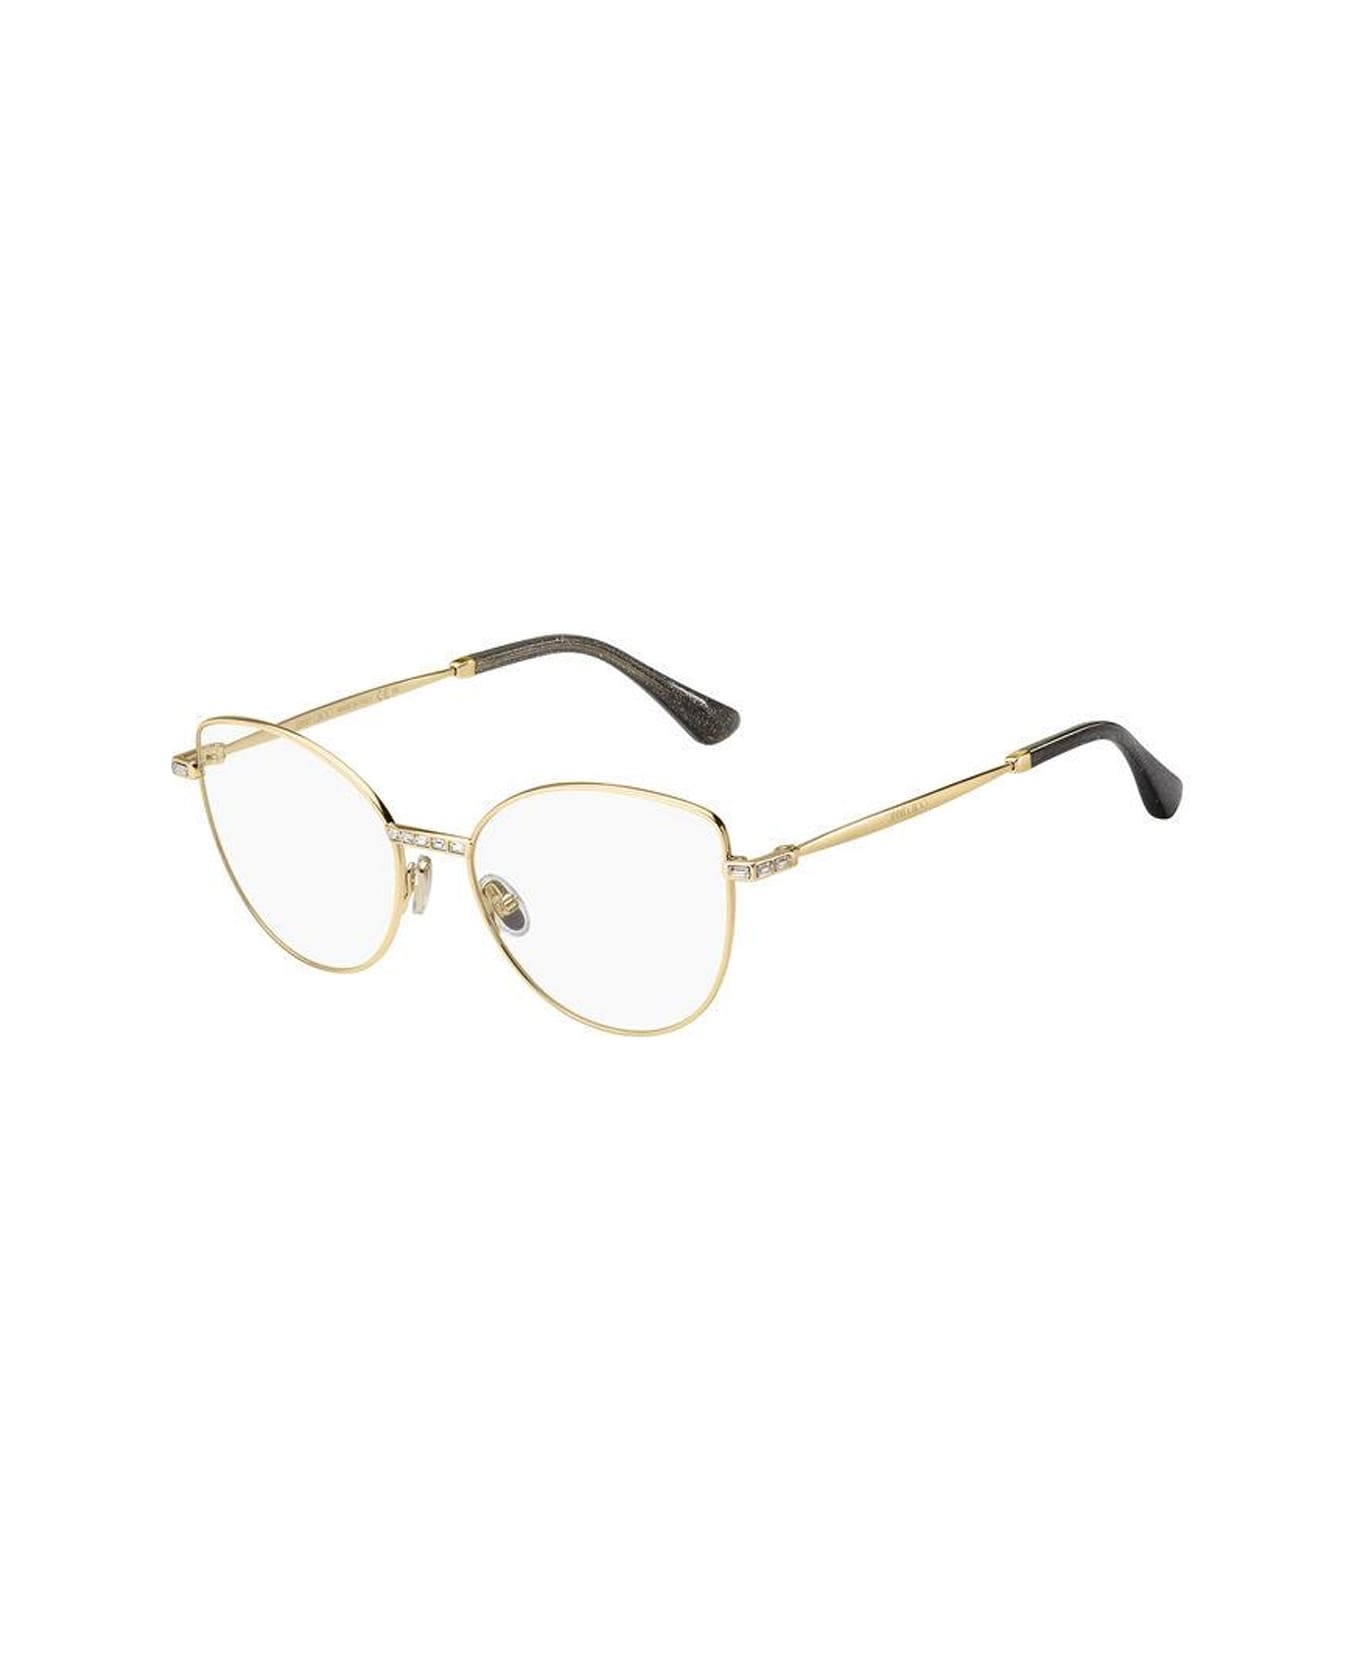 Jimmy Choo Eyewear Jc285 J5g/17 Glasses - Oro